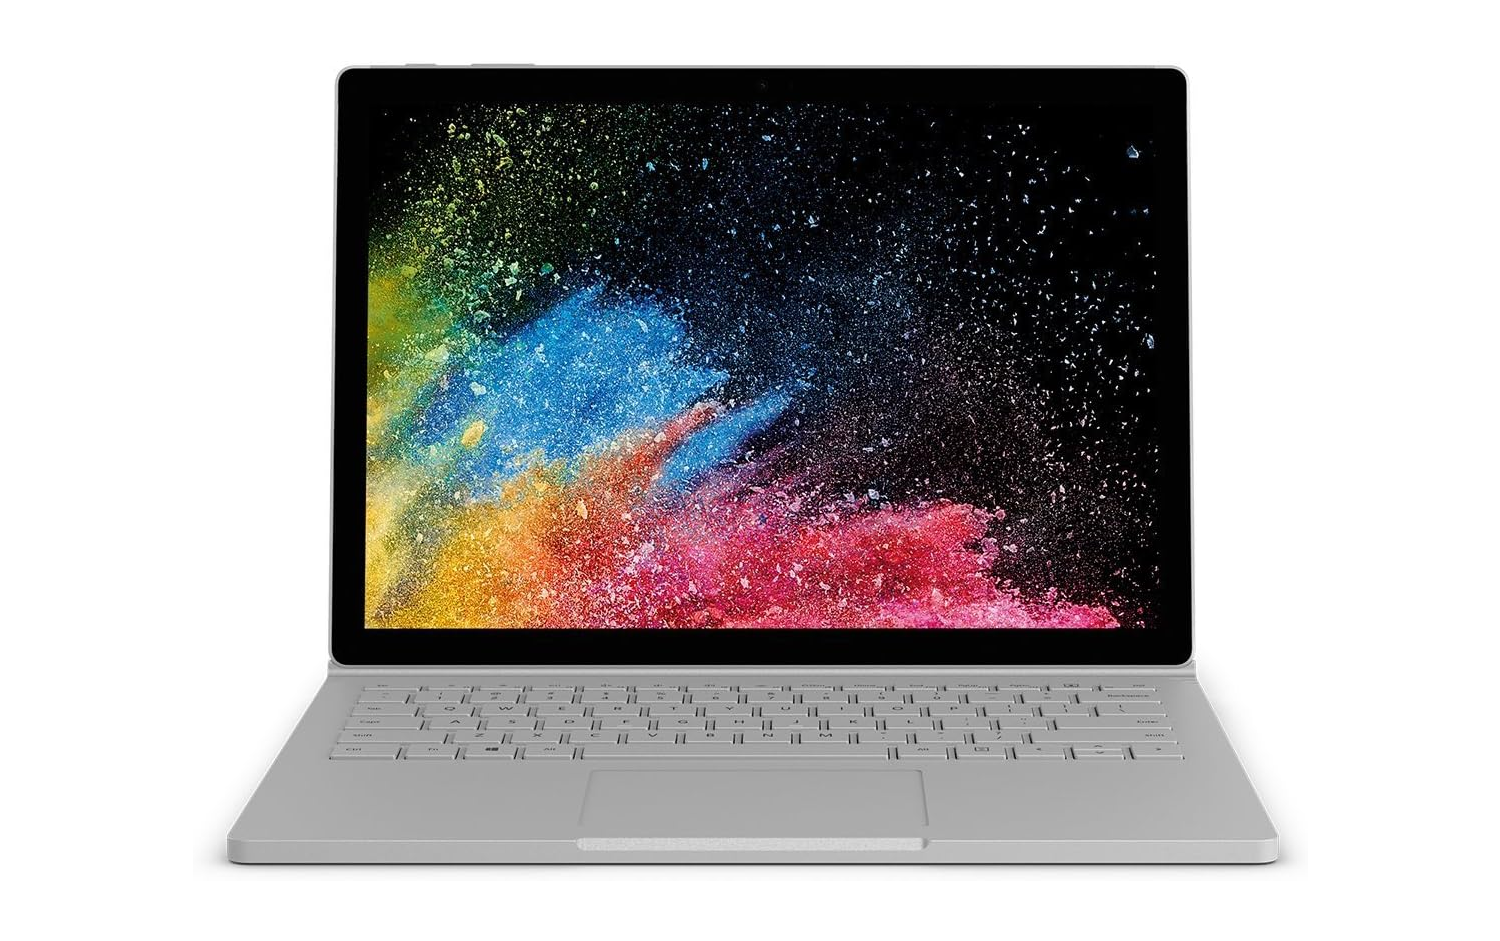 Microsoft Surface Book 2 Intel Core i7-8th Gen 8GB RAM 256GB SSD Microsoft Windows 10 Pro Touchscreen NVIDIA GeForce GTX 1050